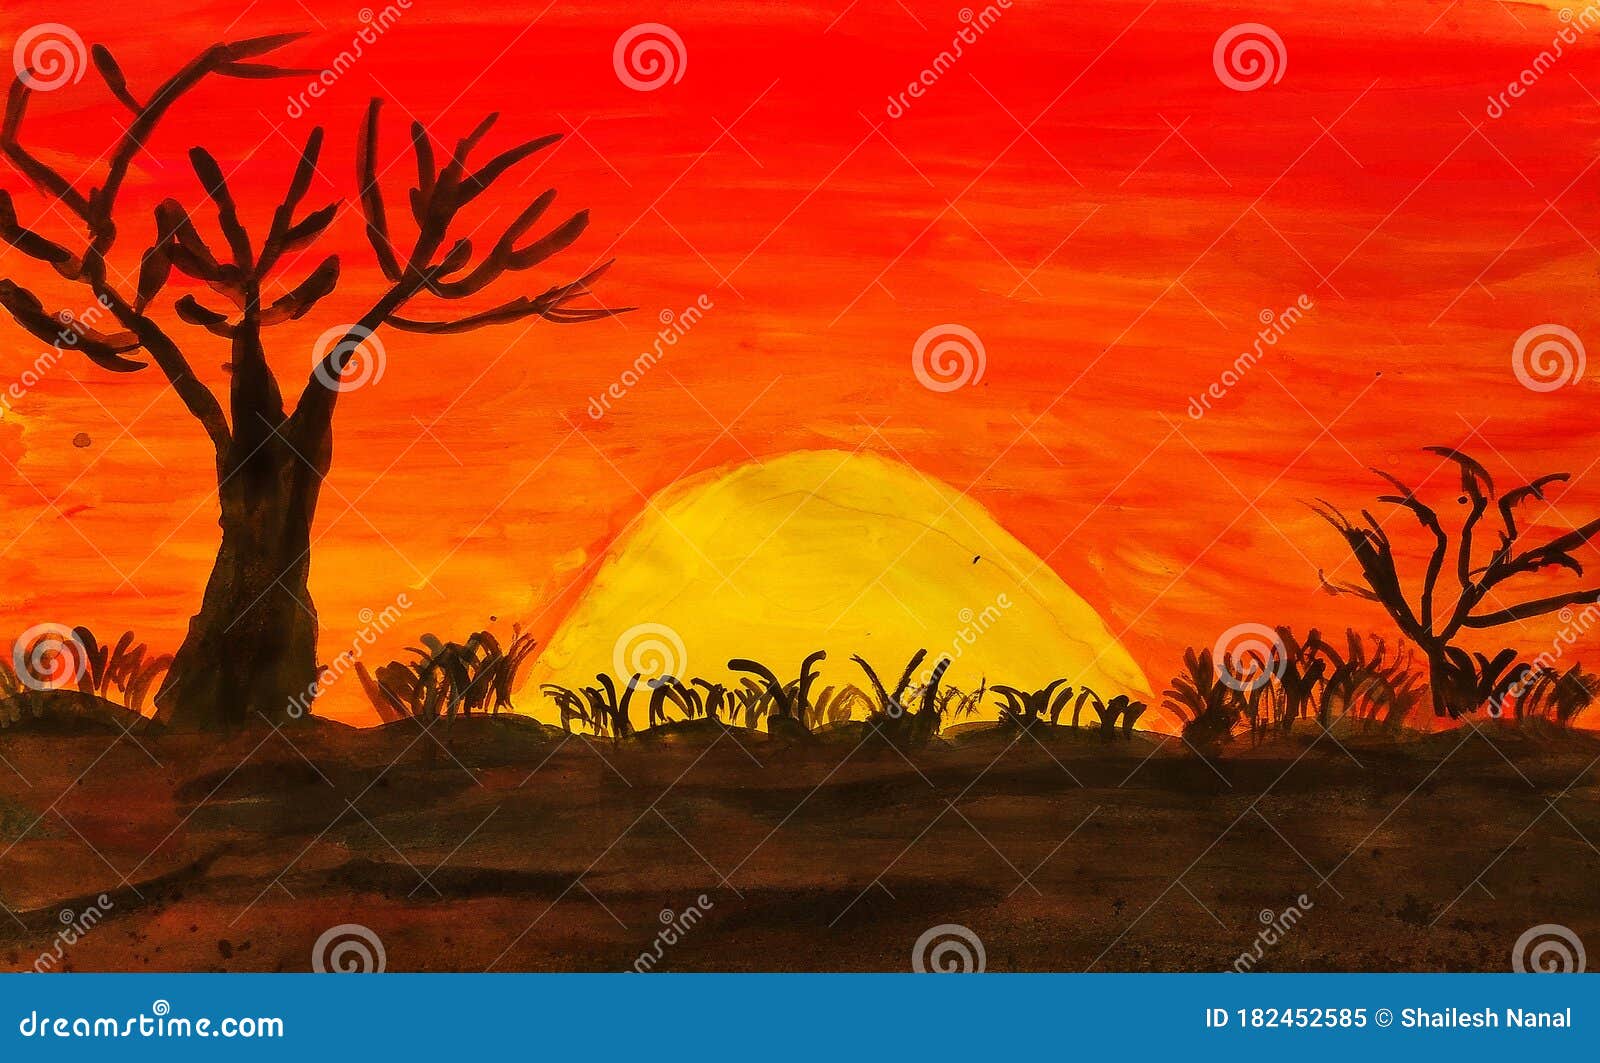 The Sunrise Sketch Stock Illustration Illustration Of Orange